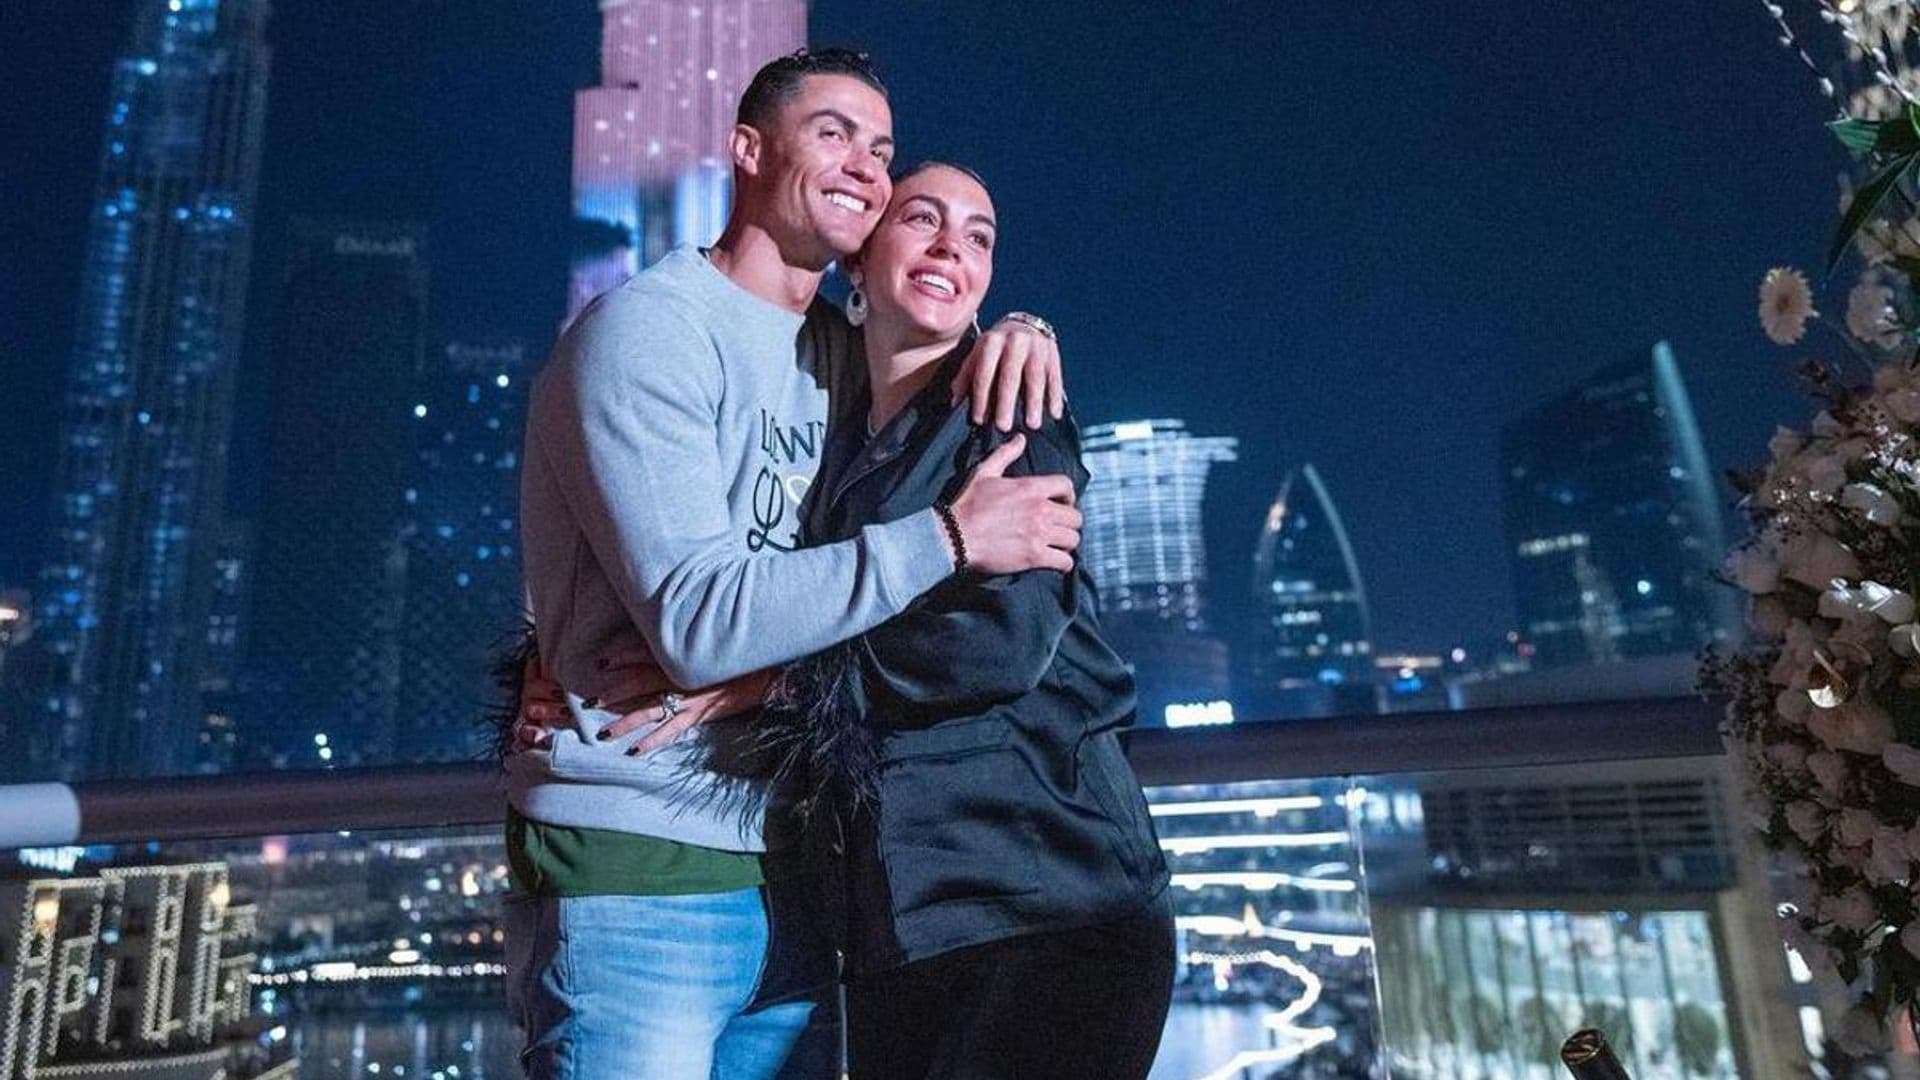 Cristiano Ronaldo lit up the world's tallest building for Georgina Rodriguez